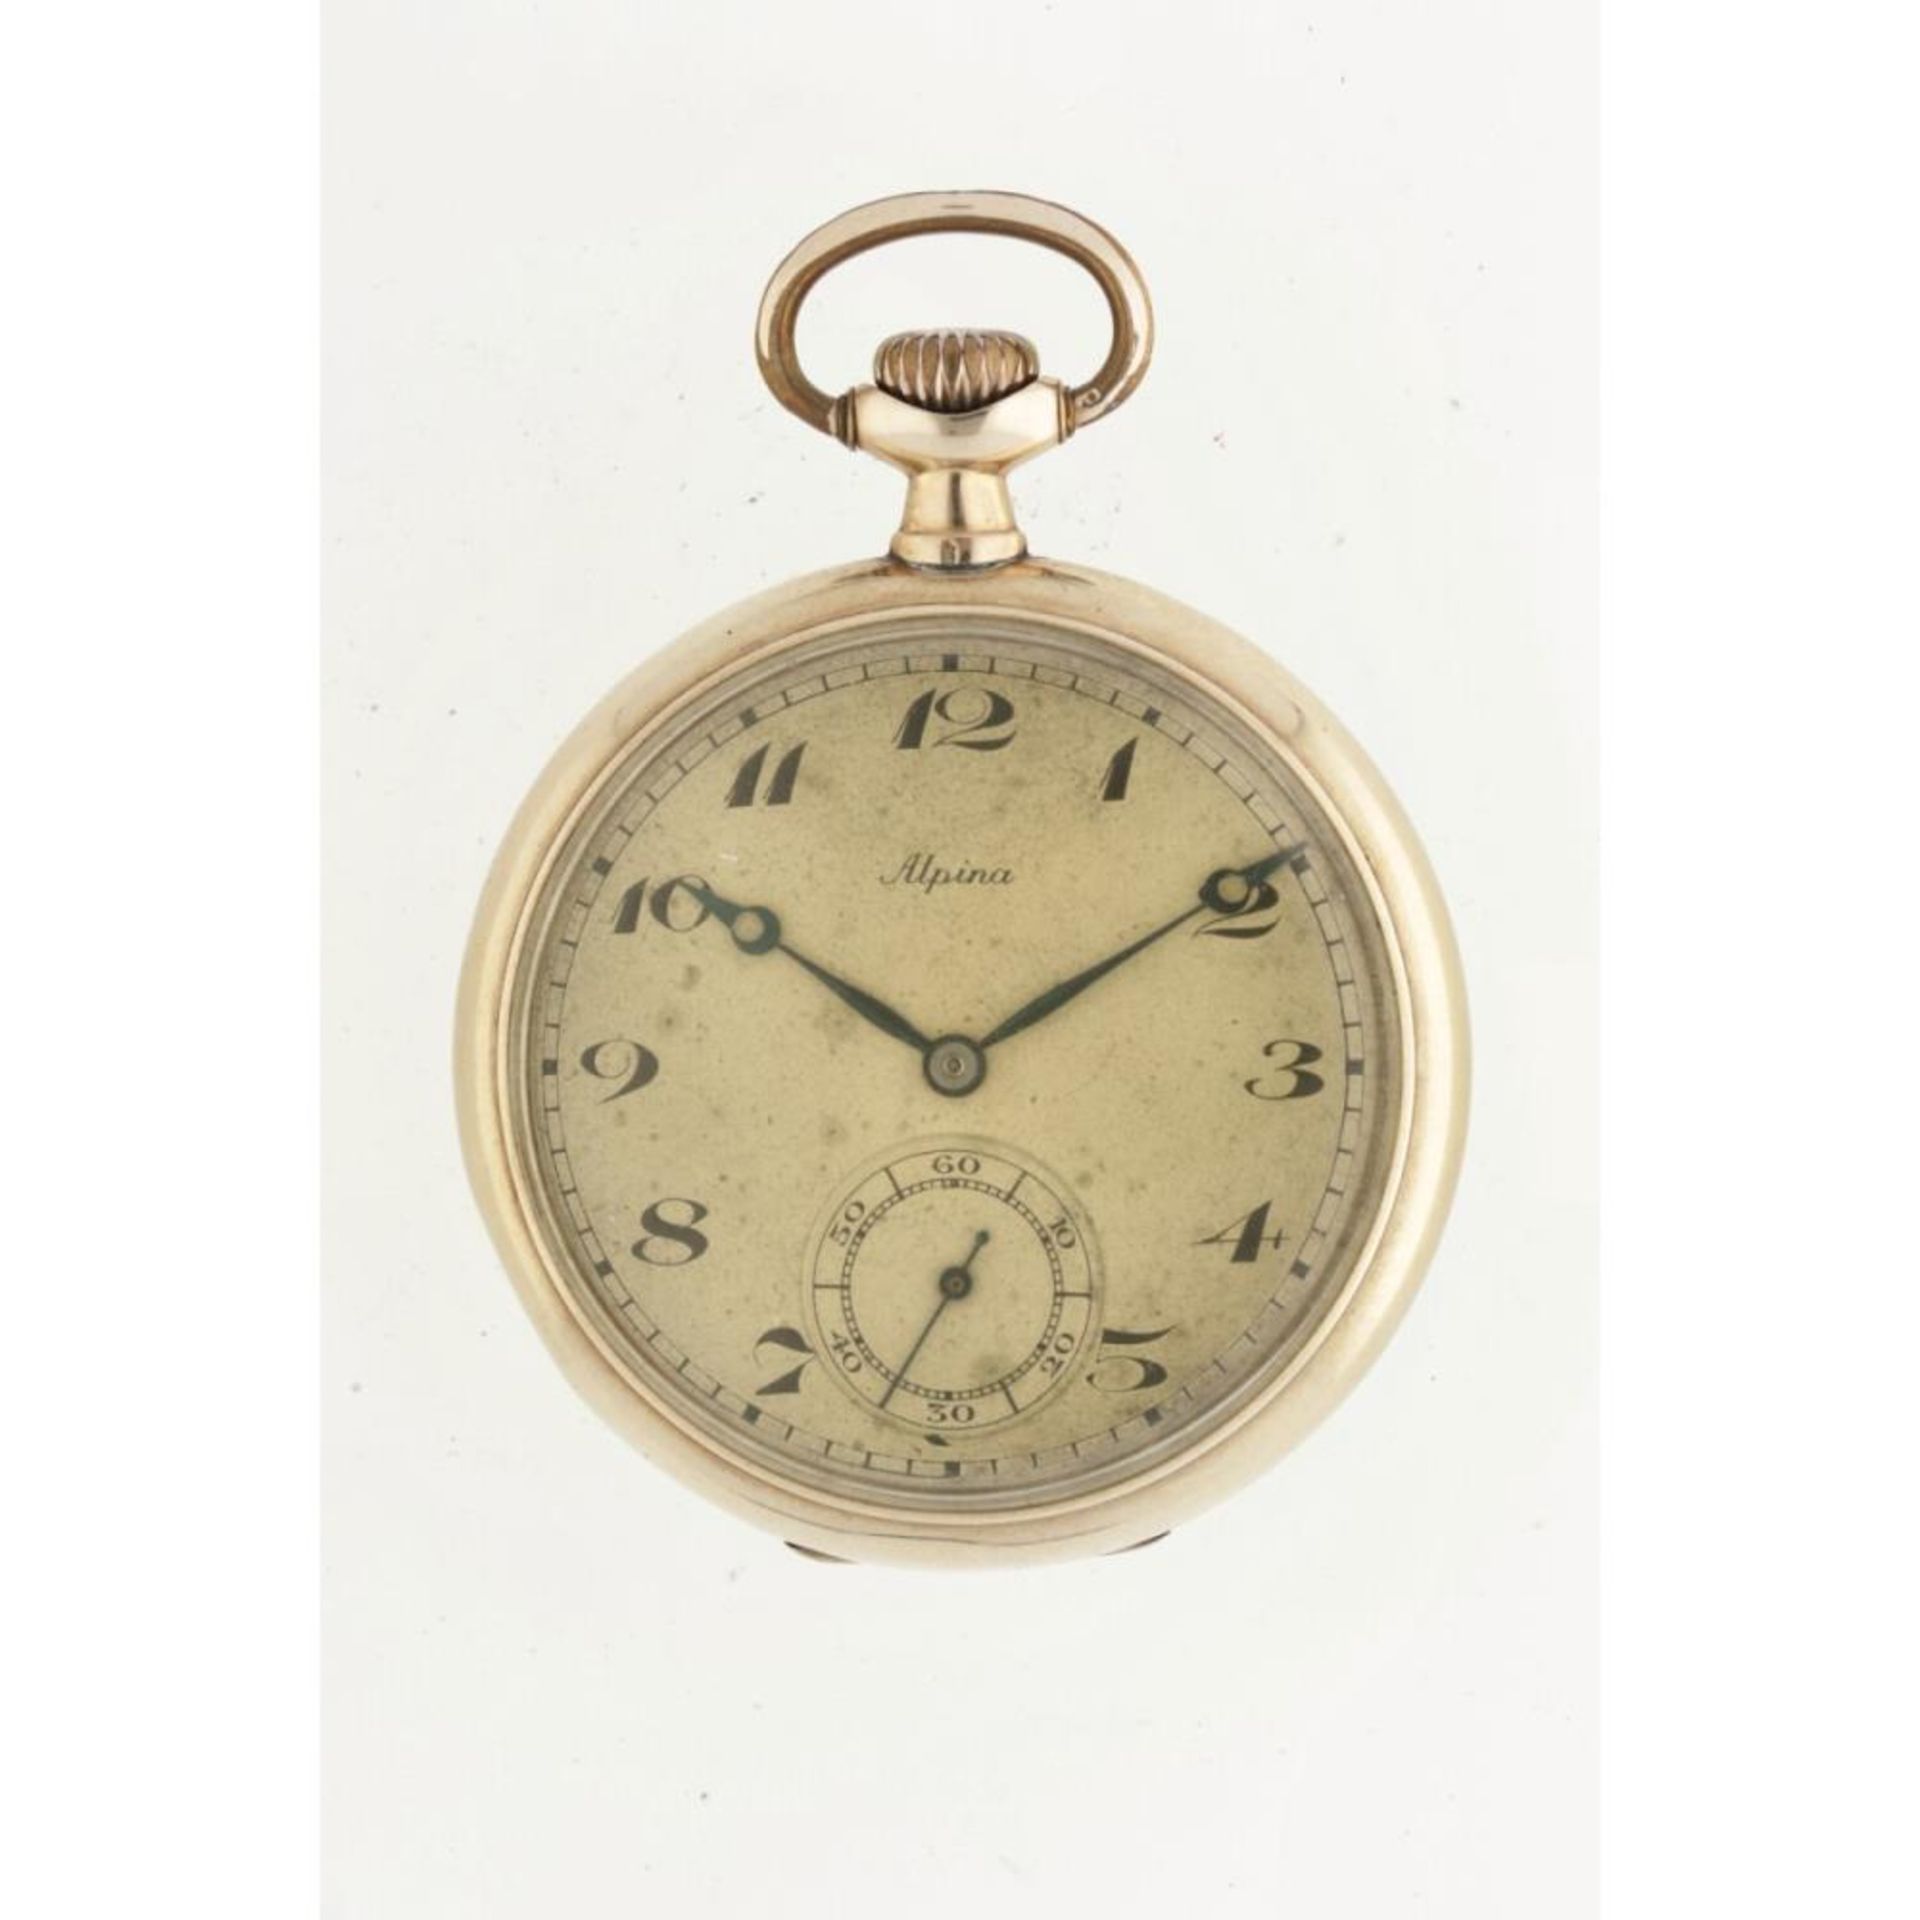 Alpina ankergang - Men's pocket watch - approx. 1900.